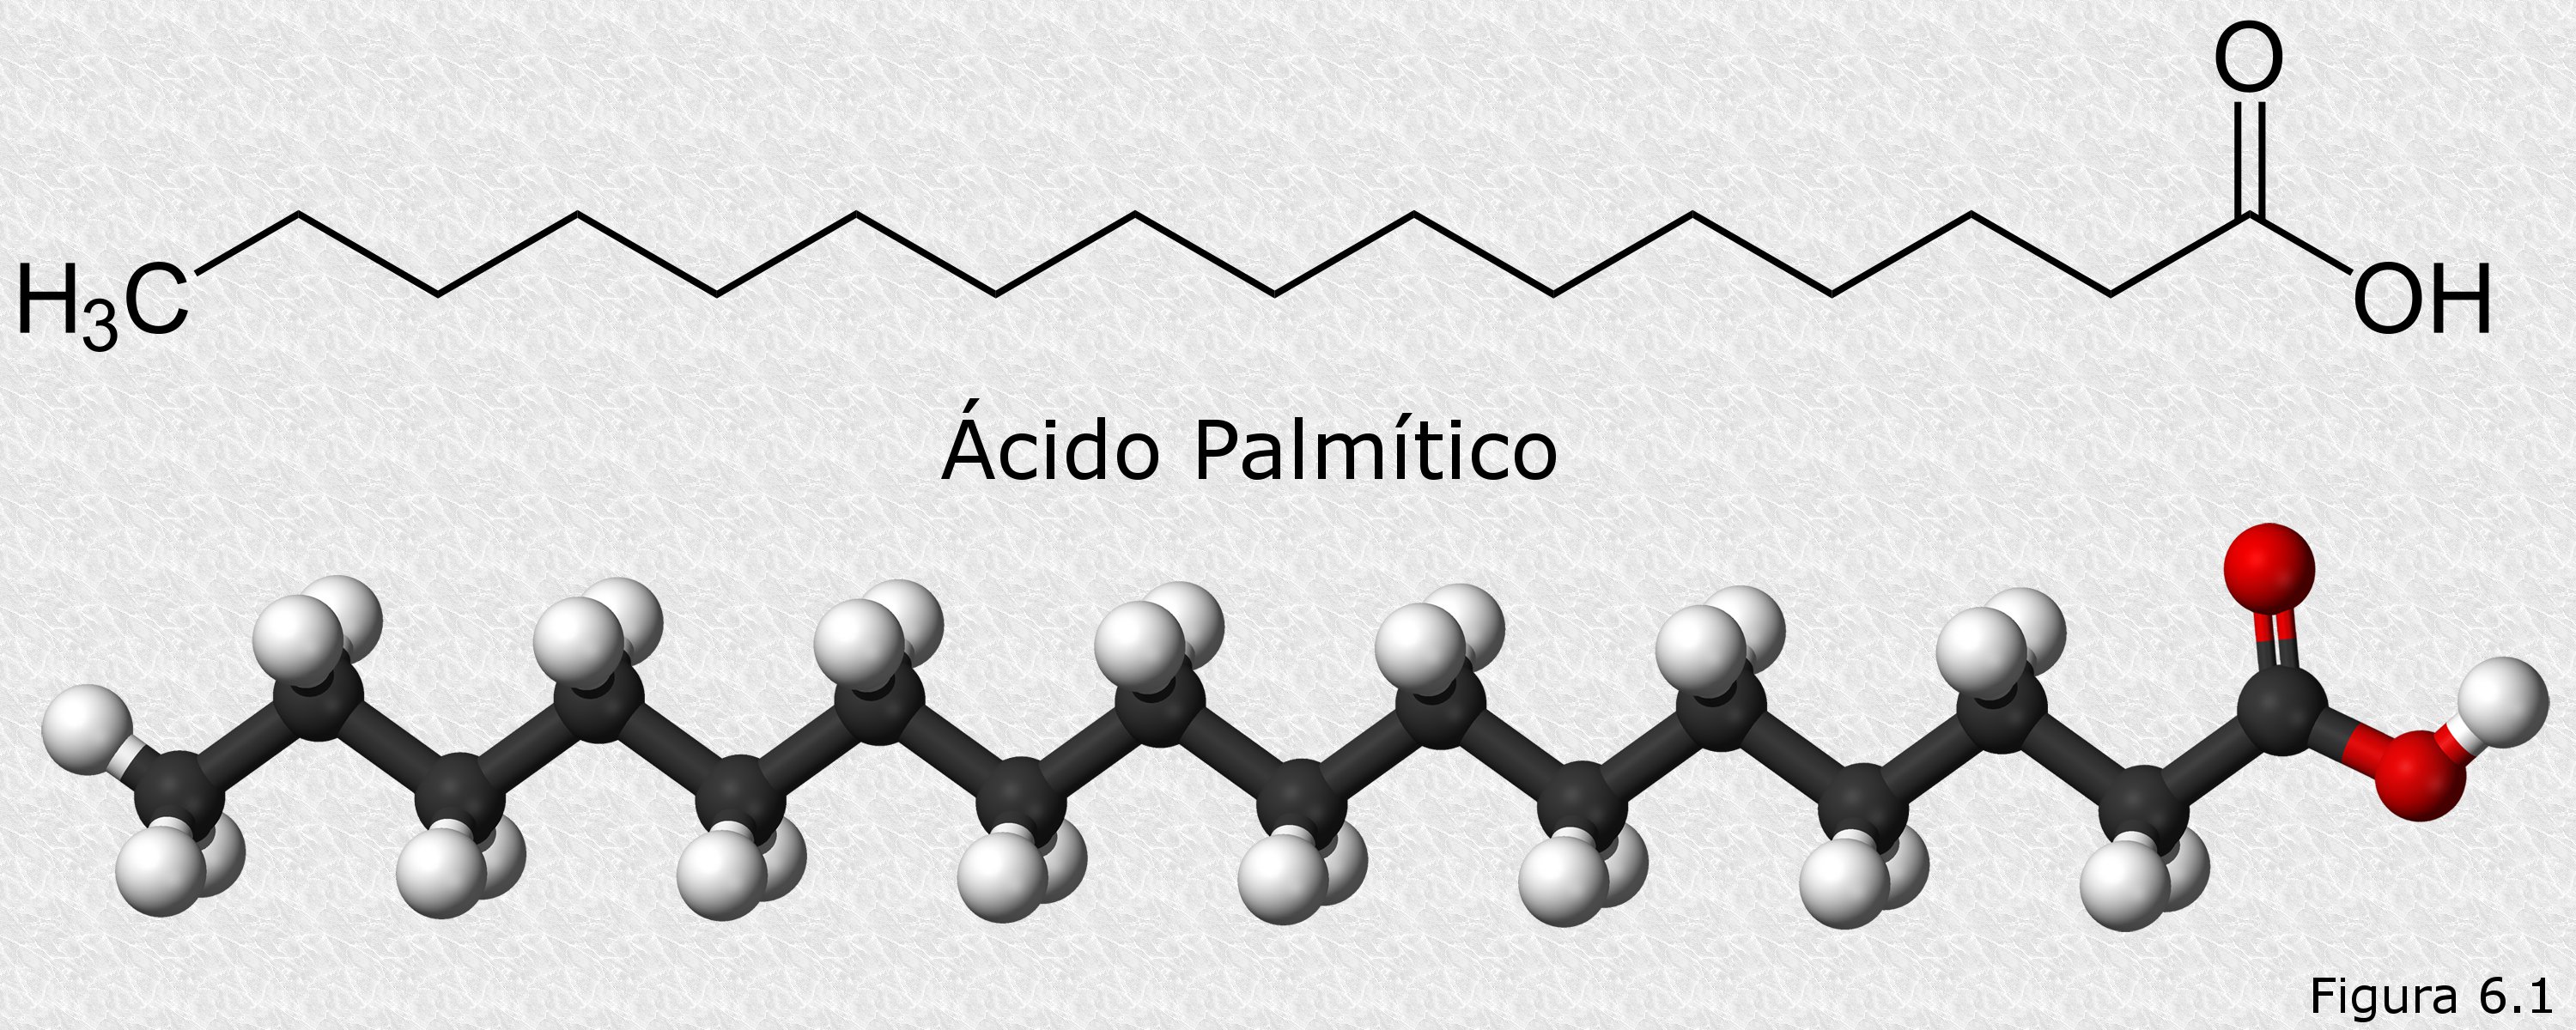 Acido Palmitico